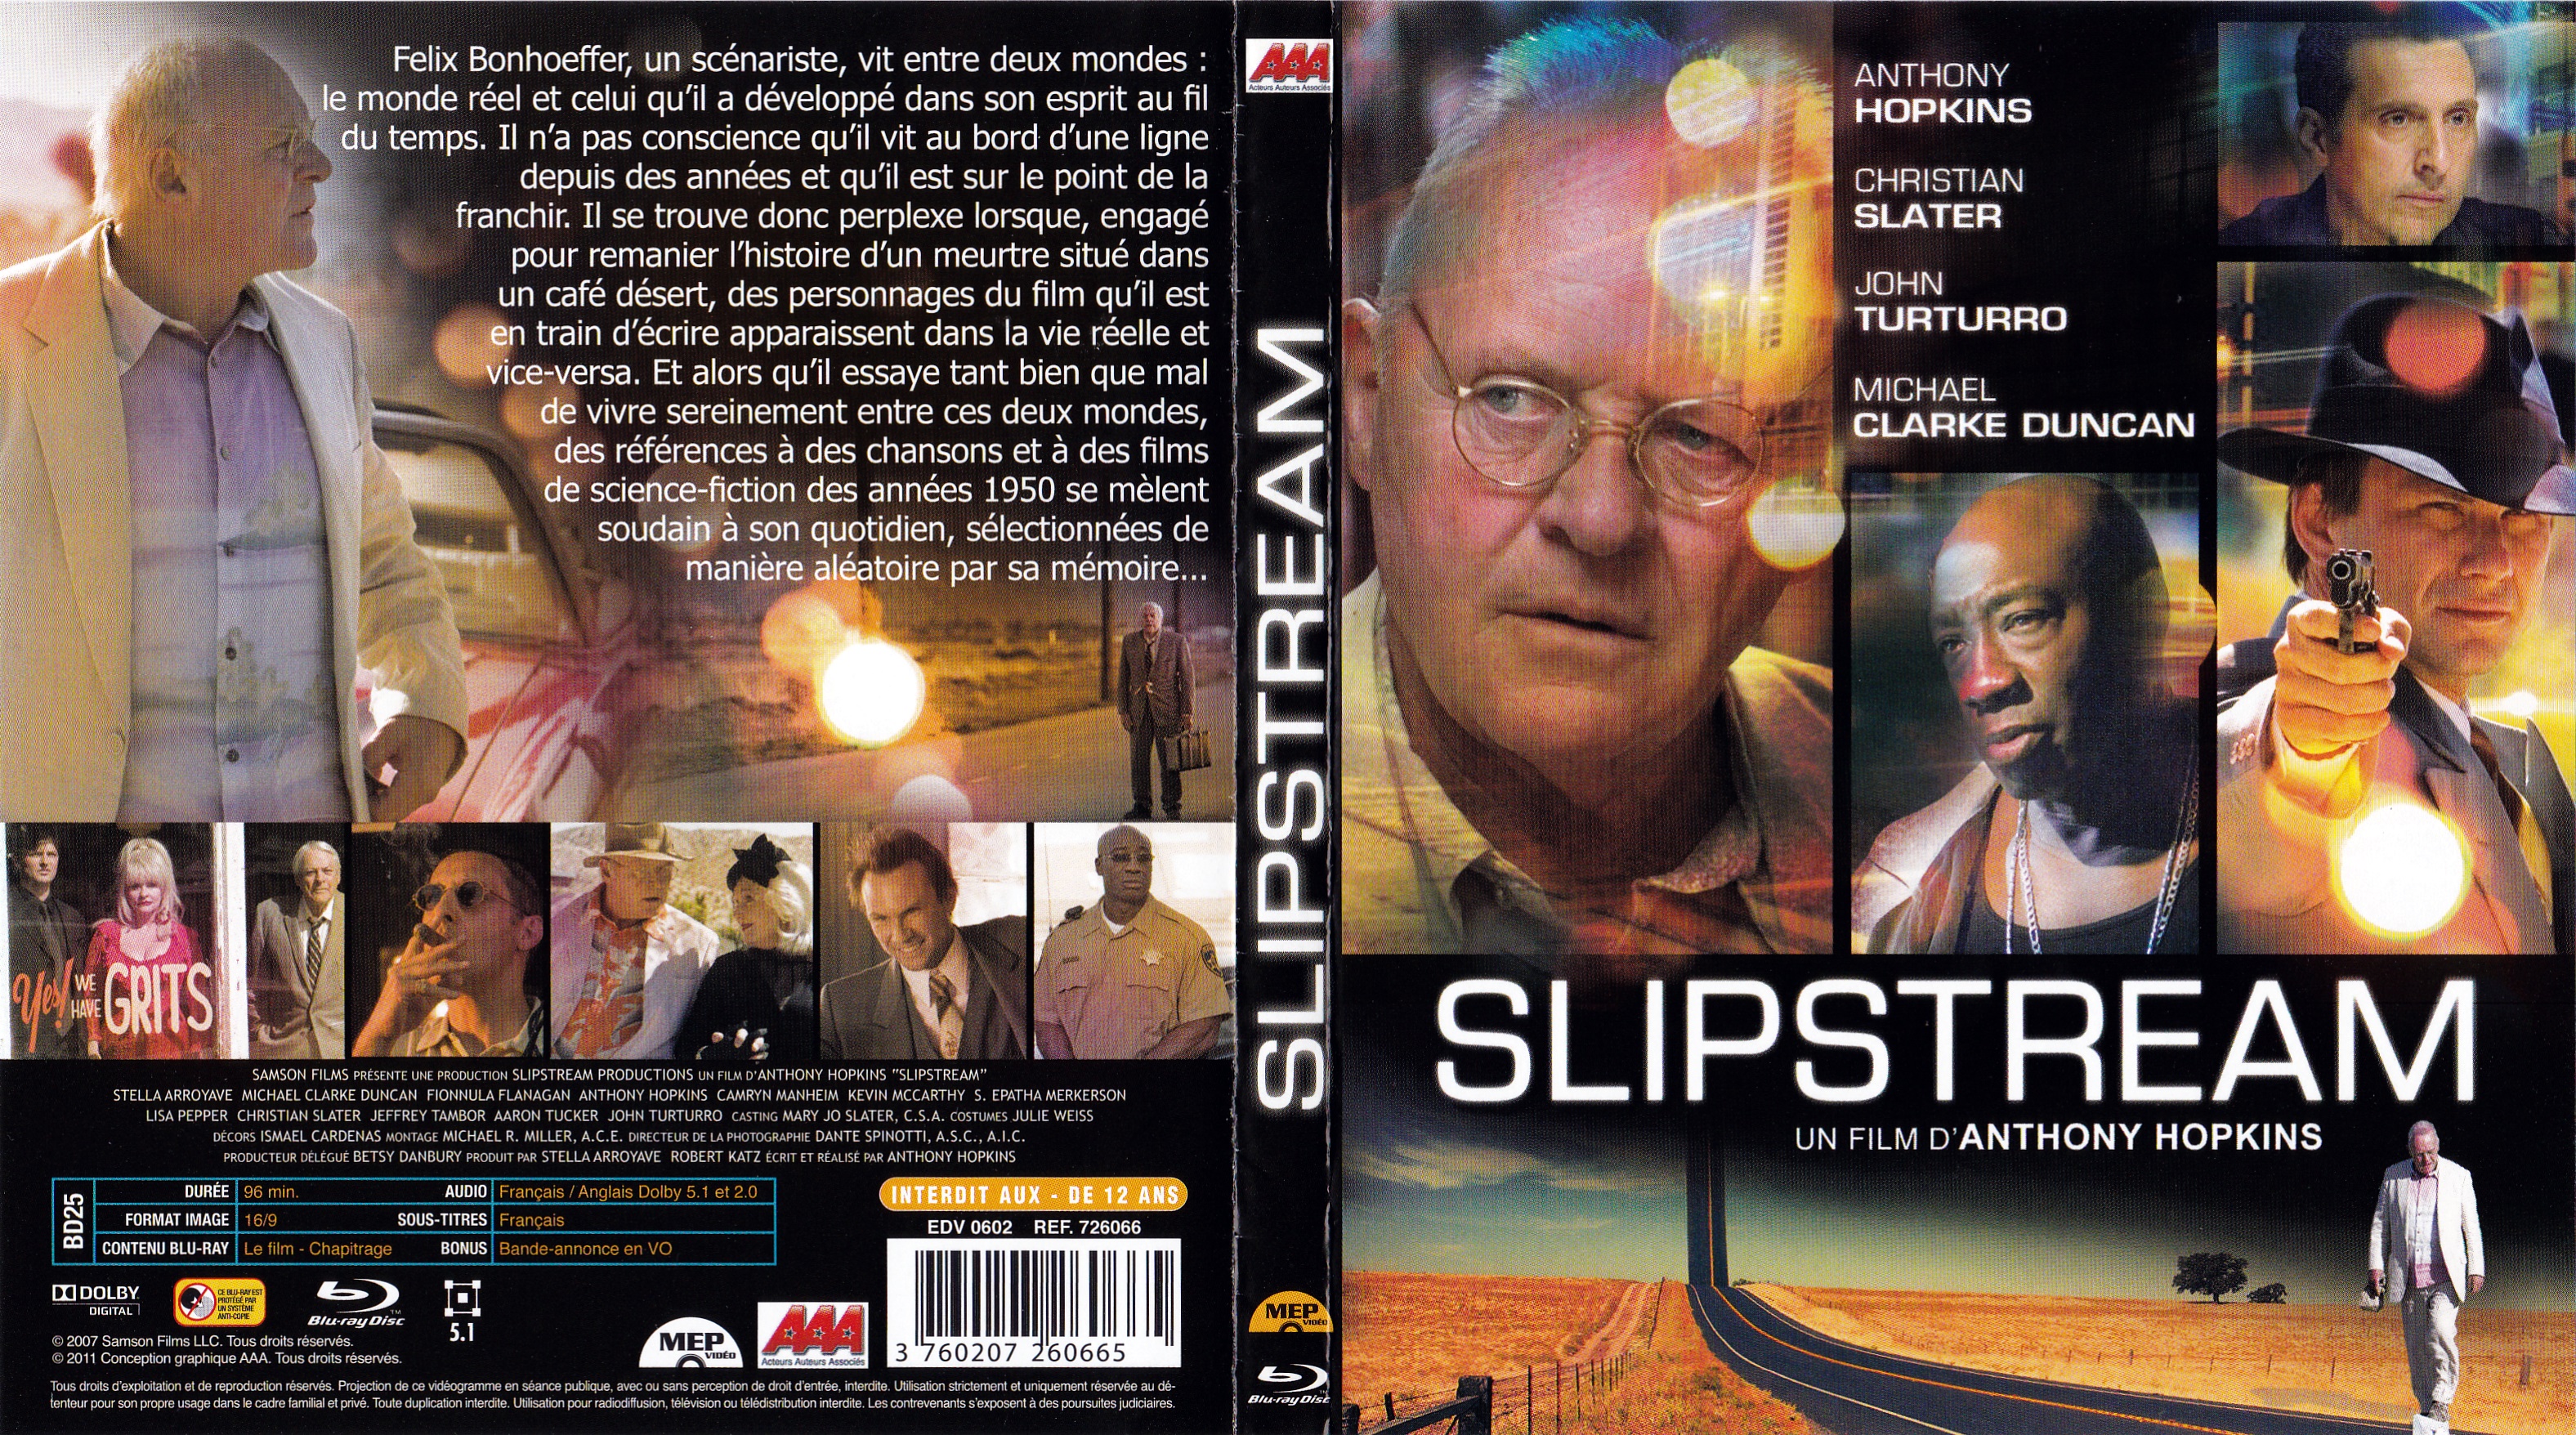 Jaquette DVD Slipstream 2007 (BLU-RAY)